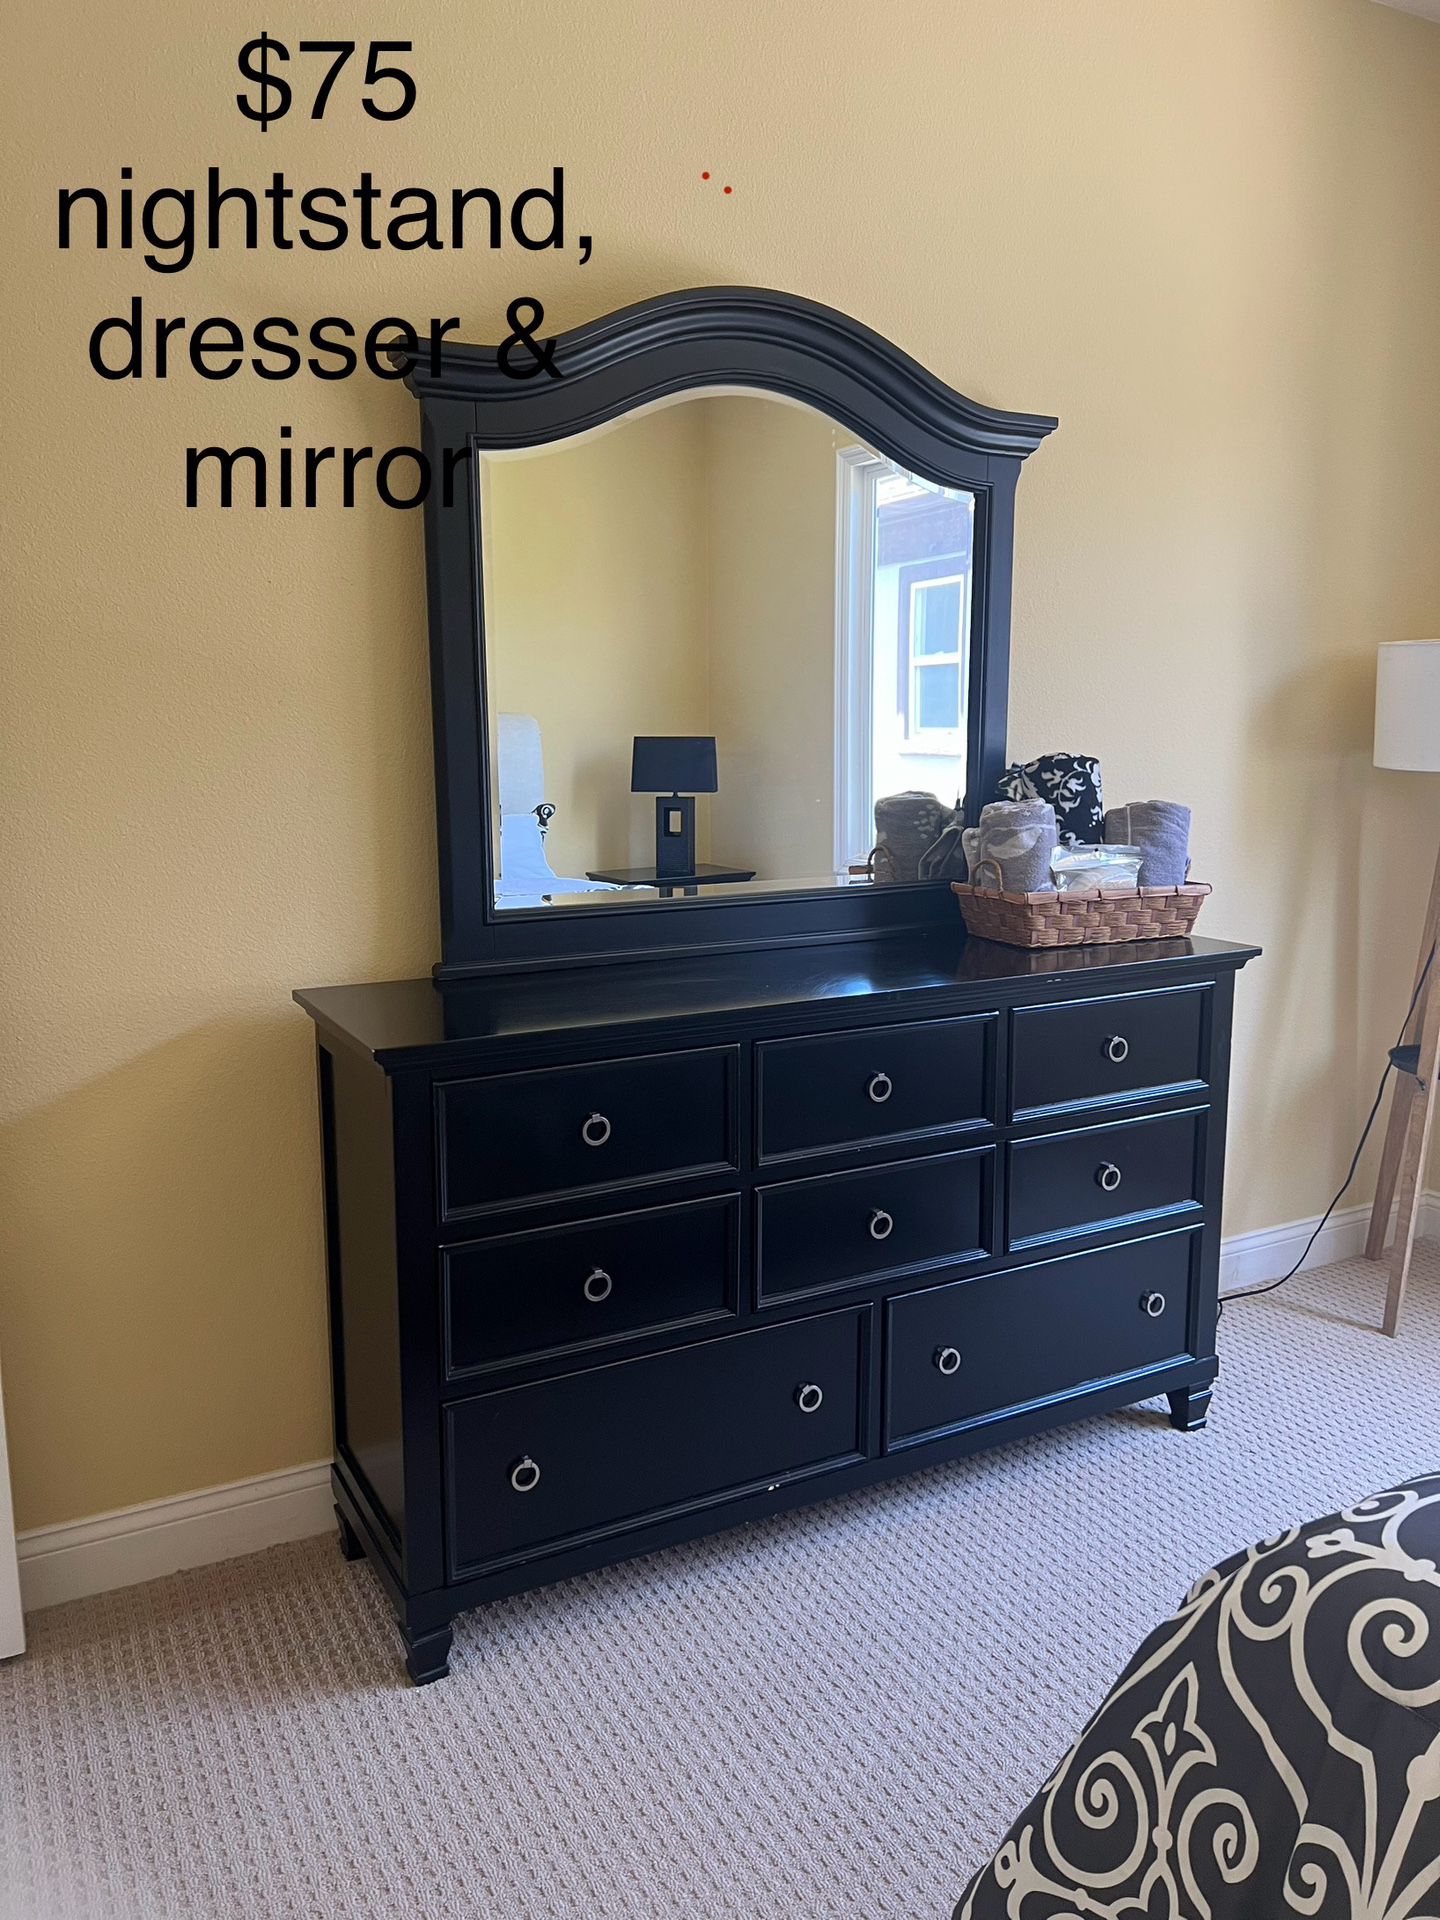 Dresser Mirror & Nightstand 